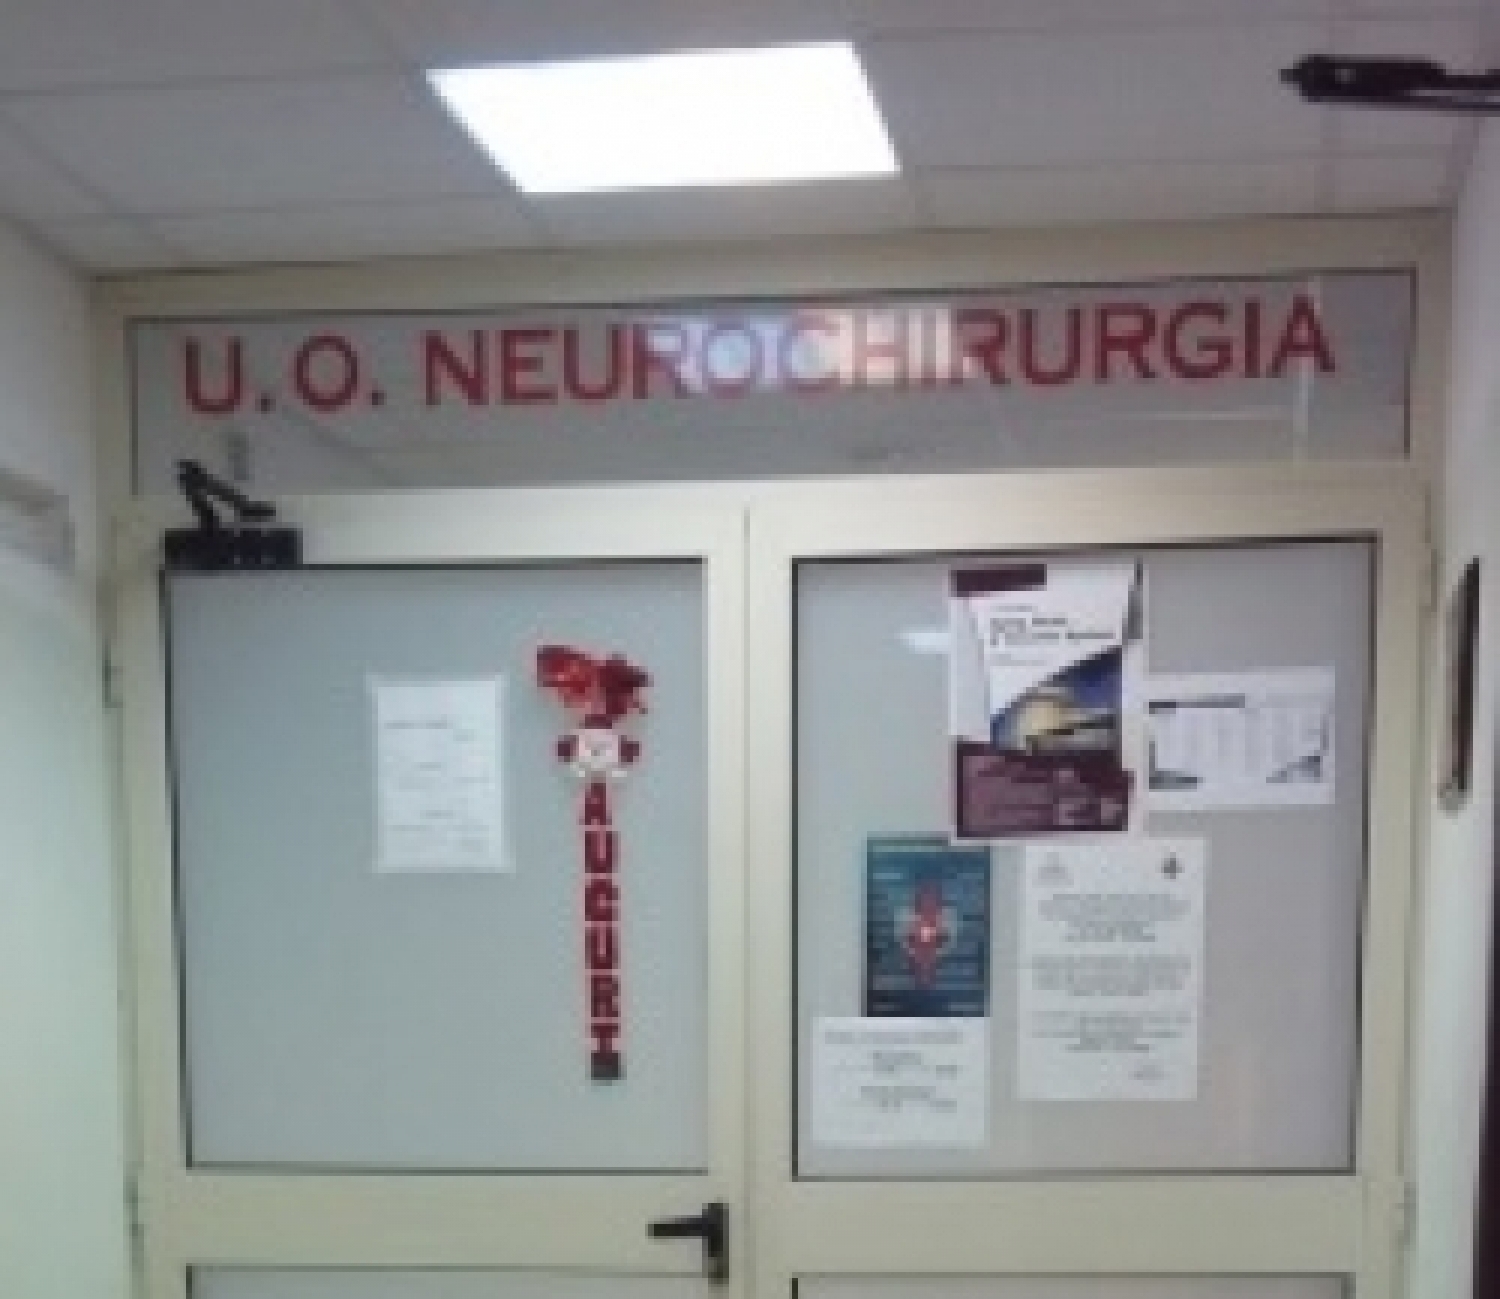 neurochirurgia.jpg